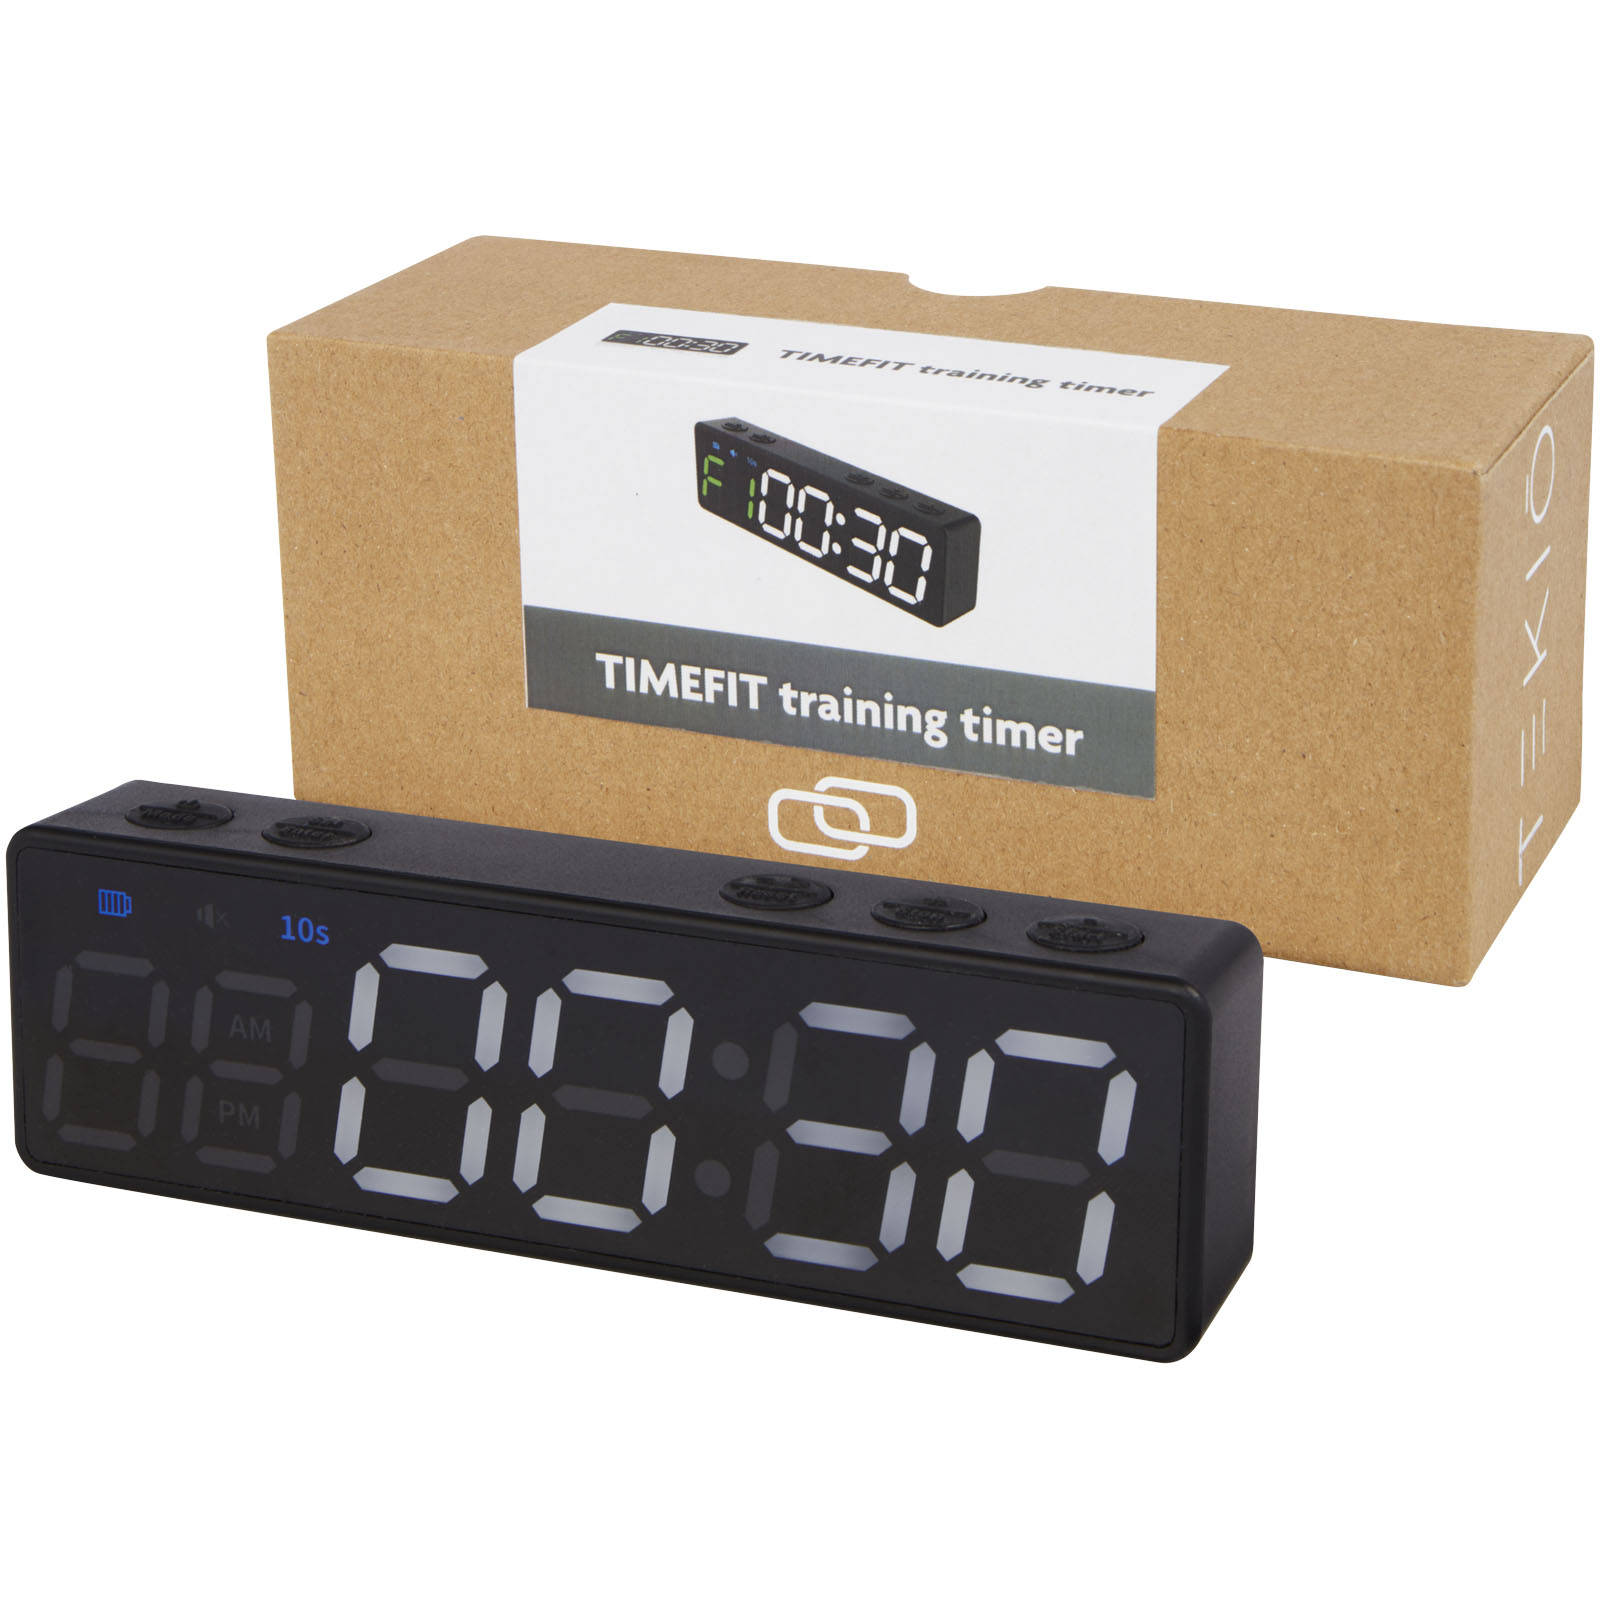 Advertising Gadgets - Timefit training timer - 5